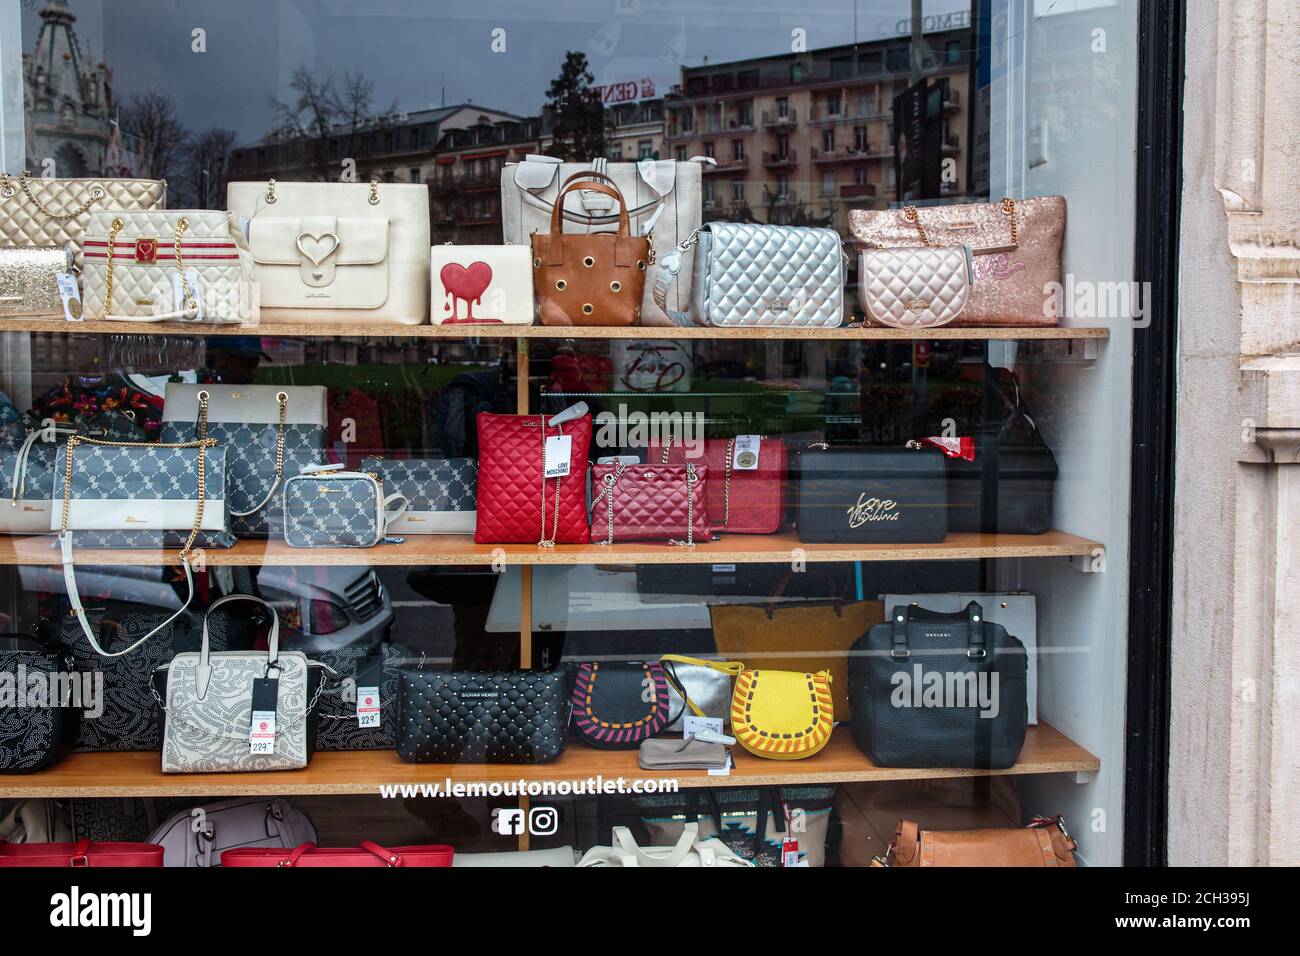 Dissona chain sling bag, Women's Fashion, Bags & Wallets, Cross